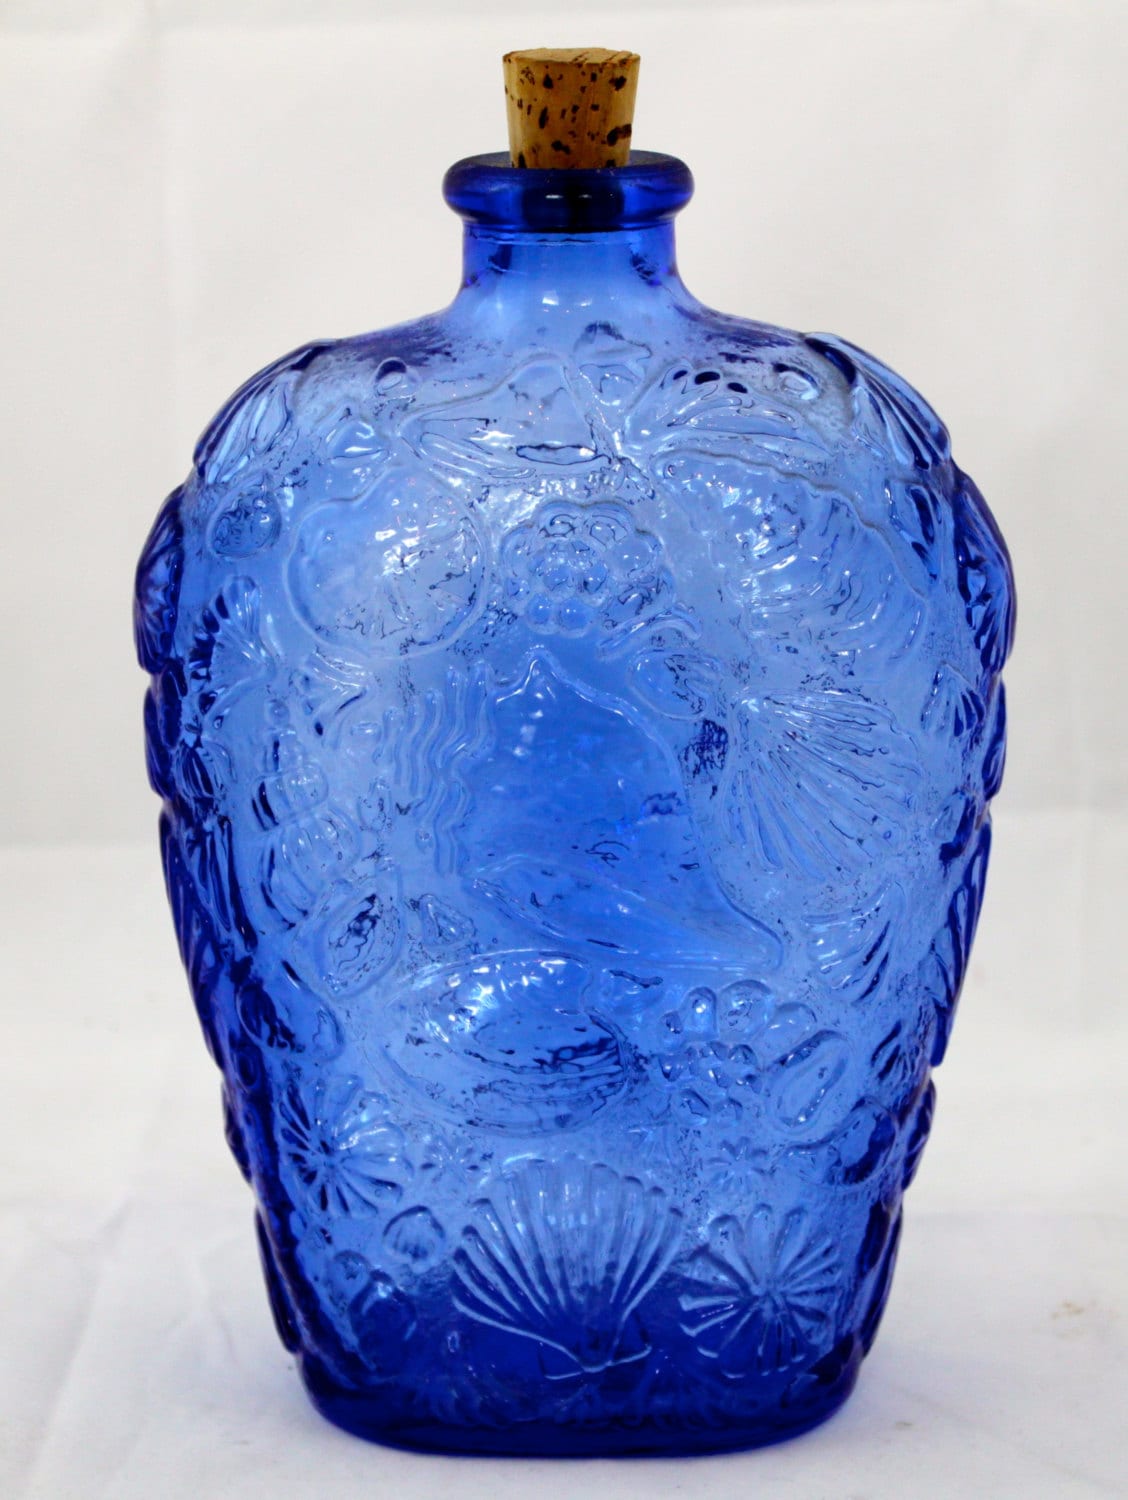 Vintage Cobalt Blue Glass Bottle with Seashell Design from